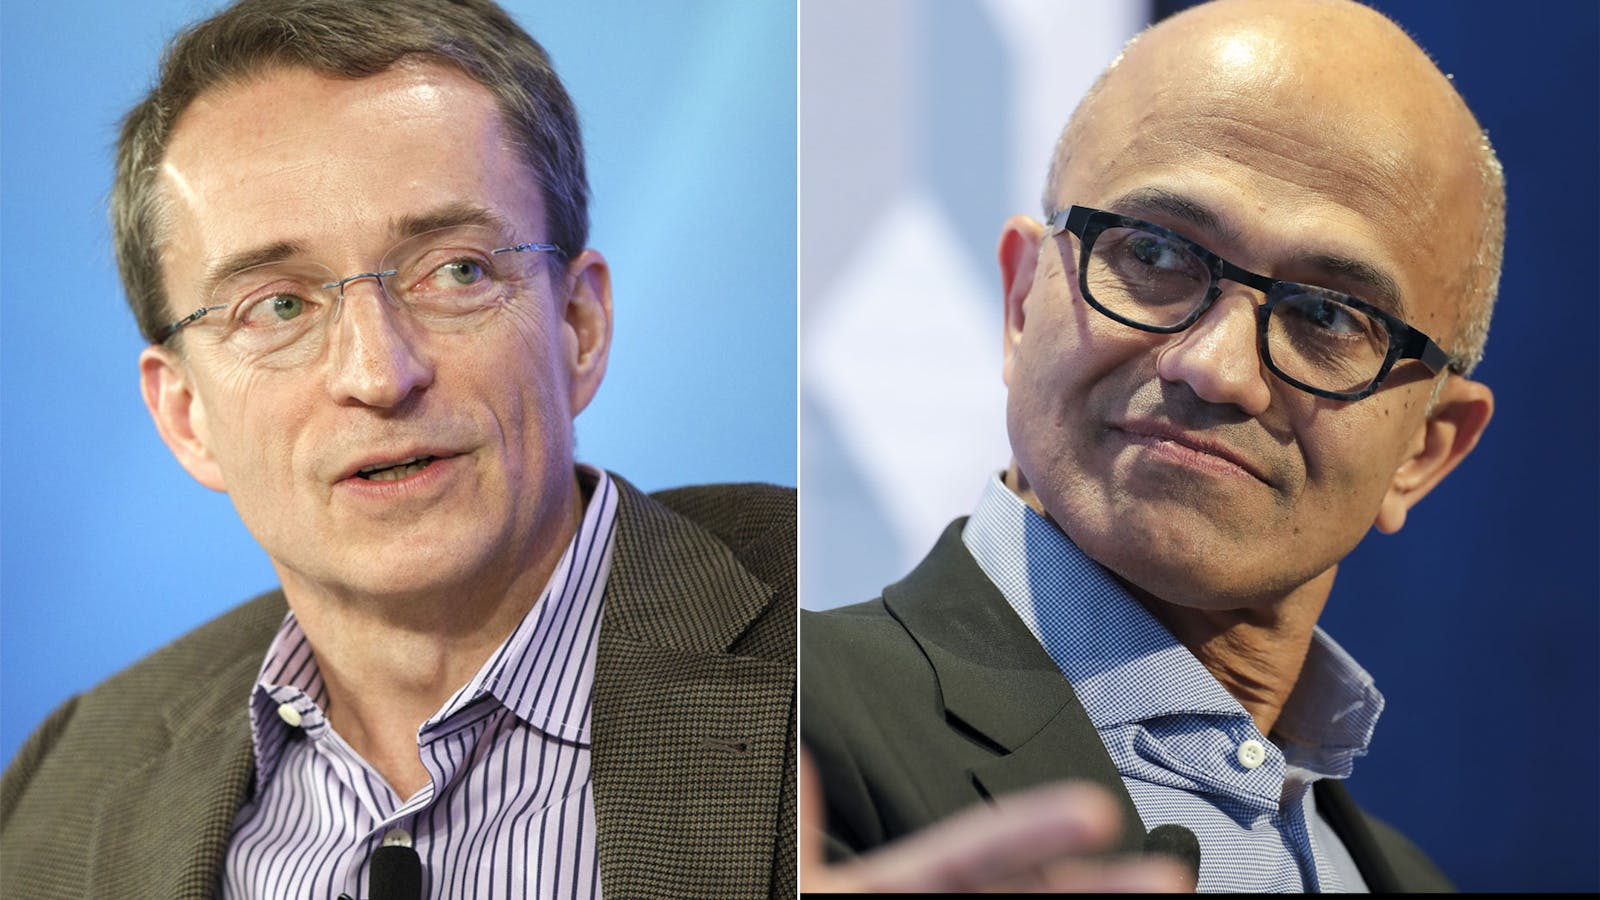 VMware's Pat Gelsinger, left, and Microsoft's Satya Nadella. Photos by Bloomberg.